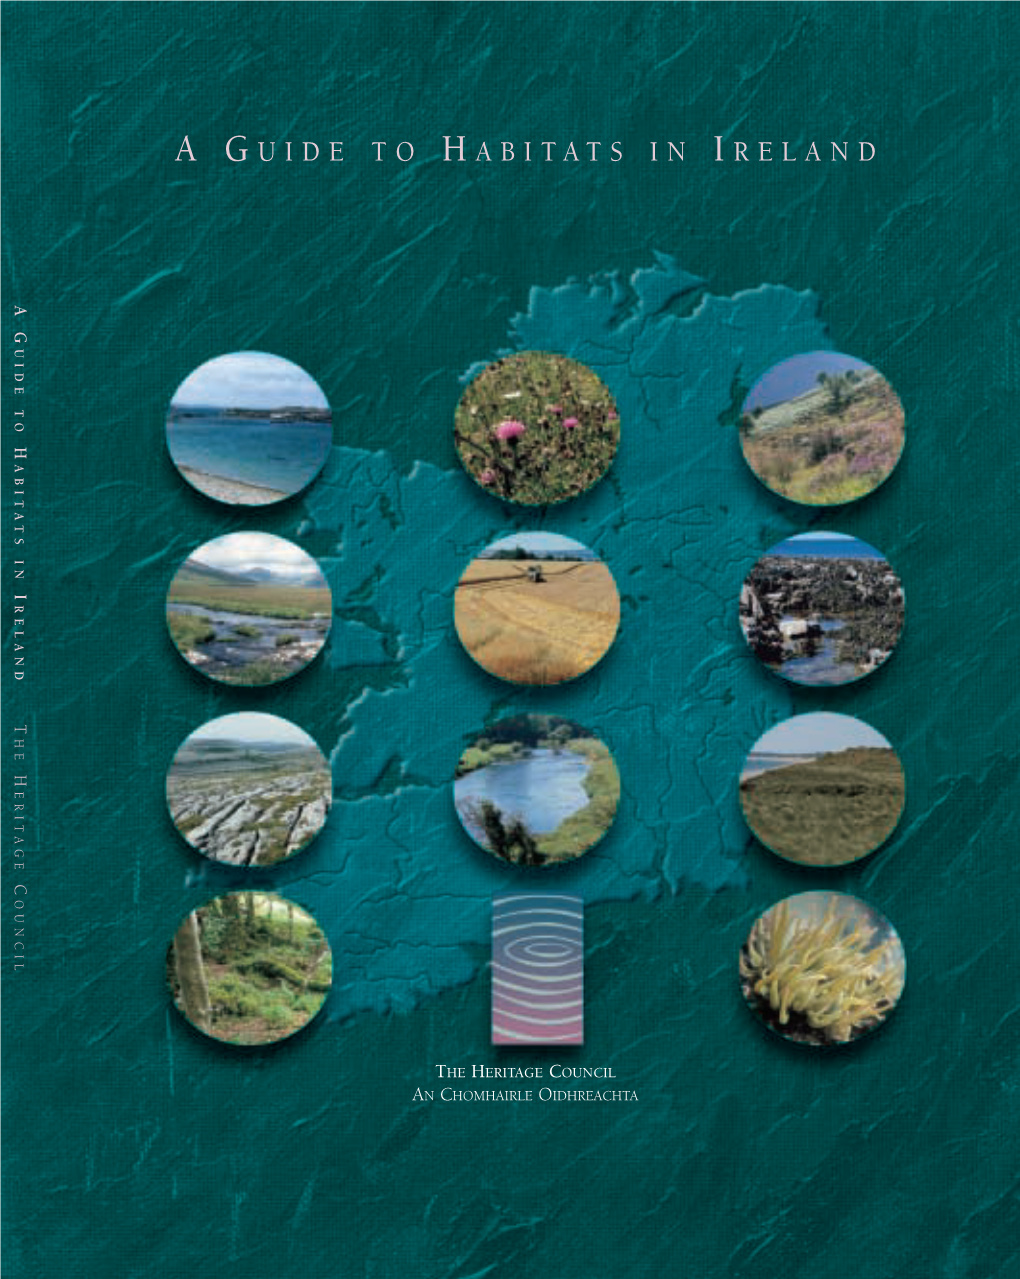 Fossitt's a Guide to Habitats in Ireland